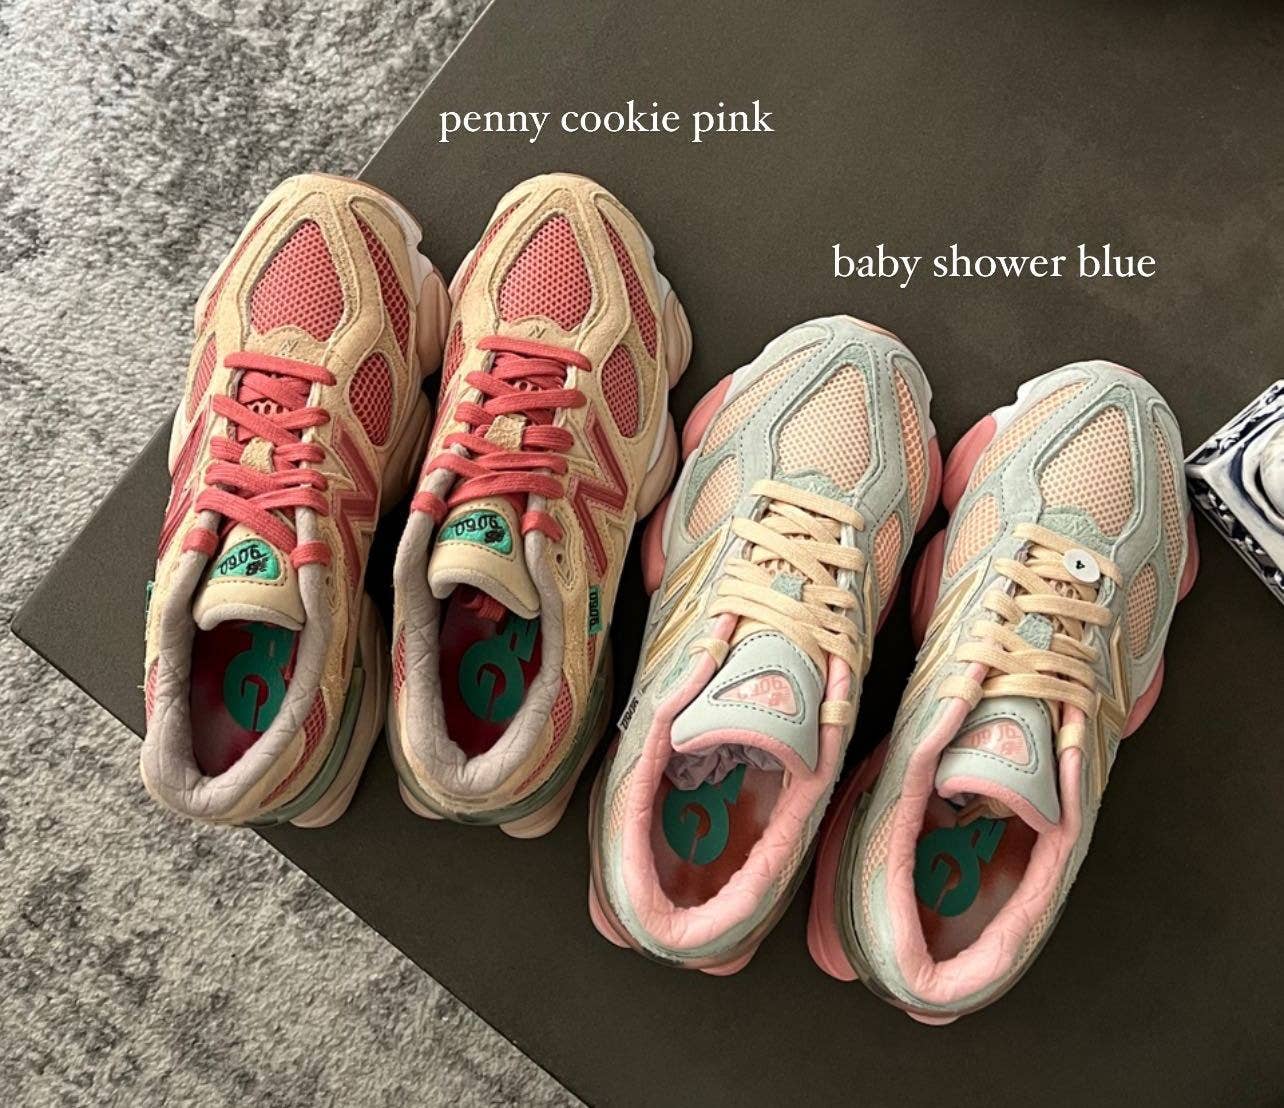 Joe Freshgoods x New Balance 9060 'Penny Cookie Pink' & 'Baby Shower Blue'